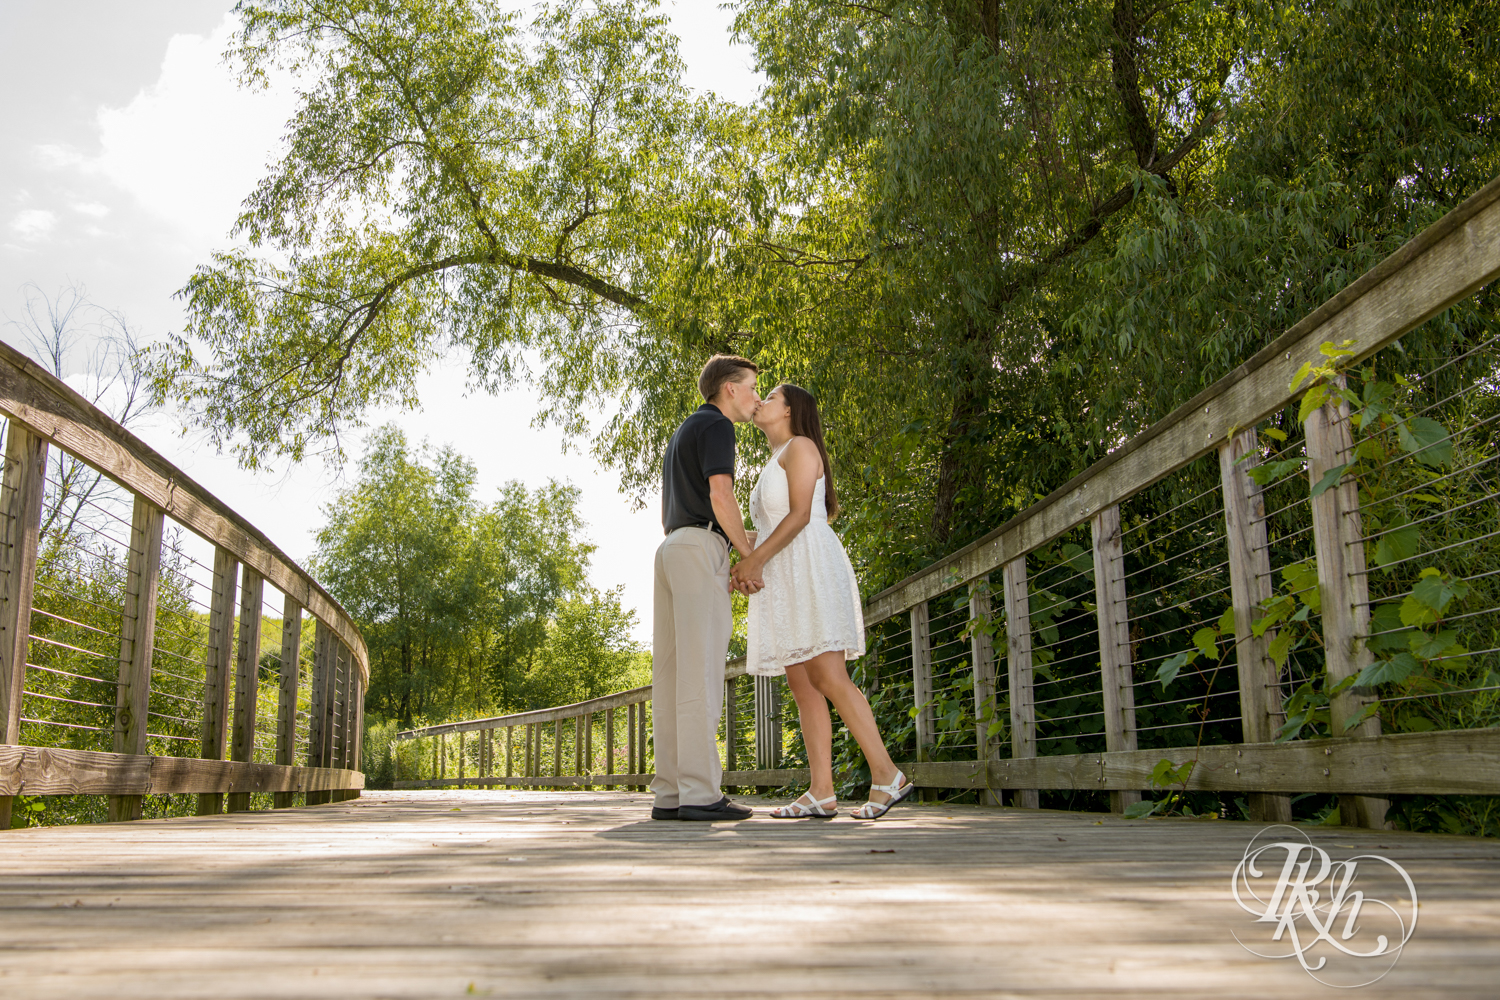 Man in black shirt and woman in white dress kiss at Lebanon Hills Regional Park in Eagan, Minnesota.